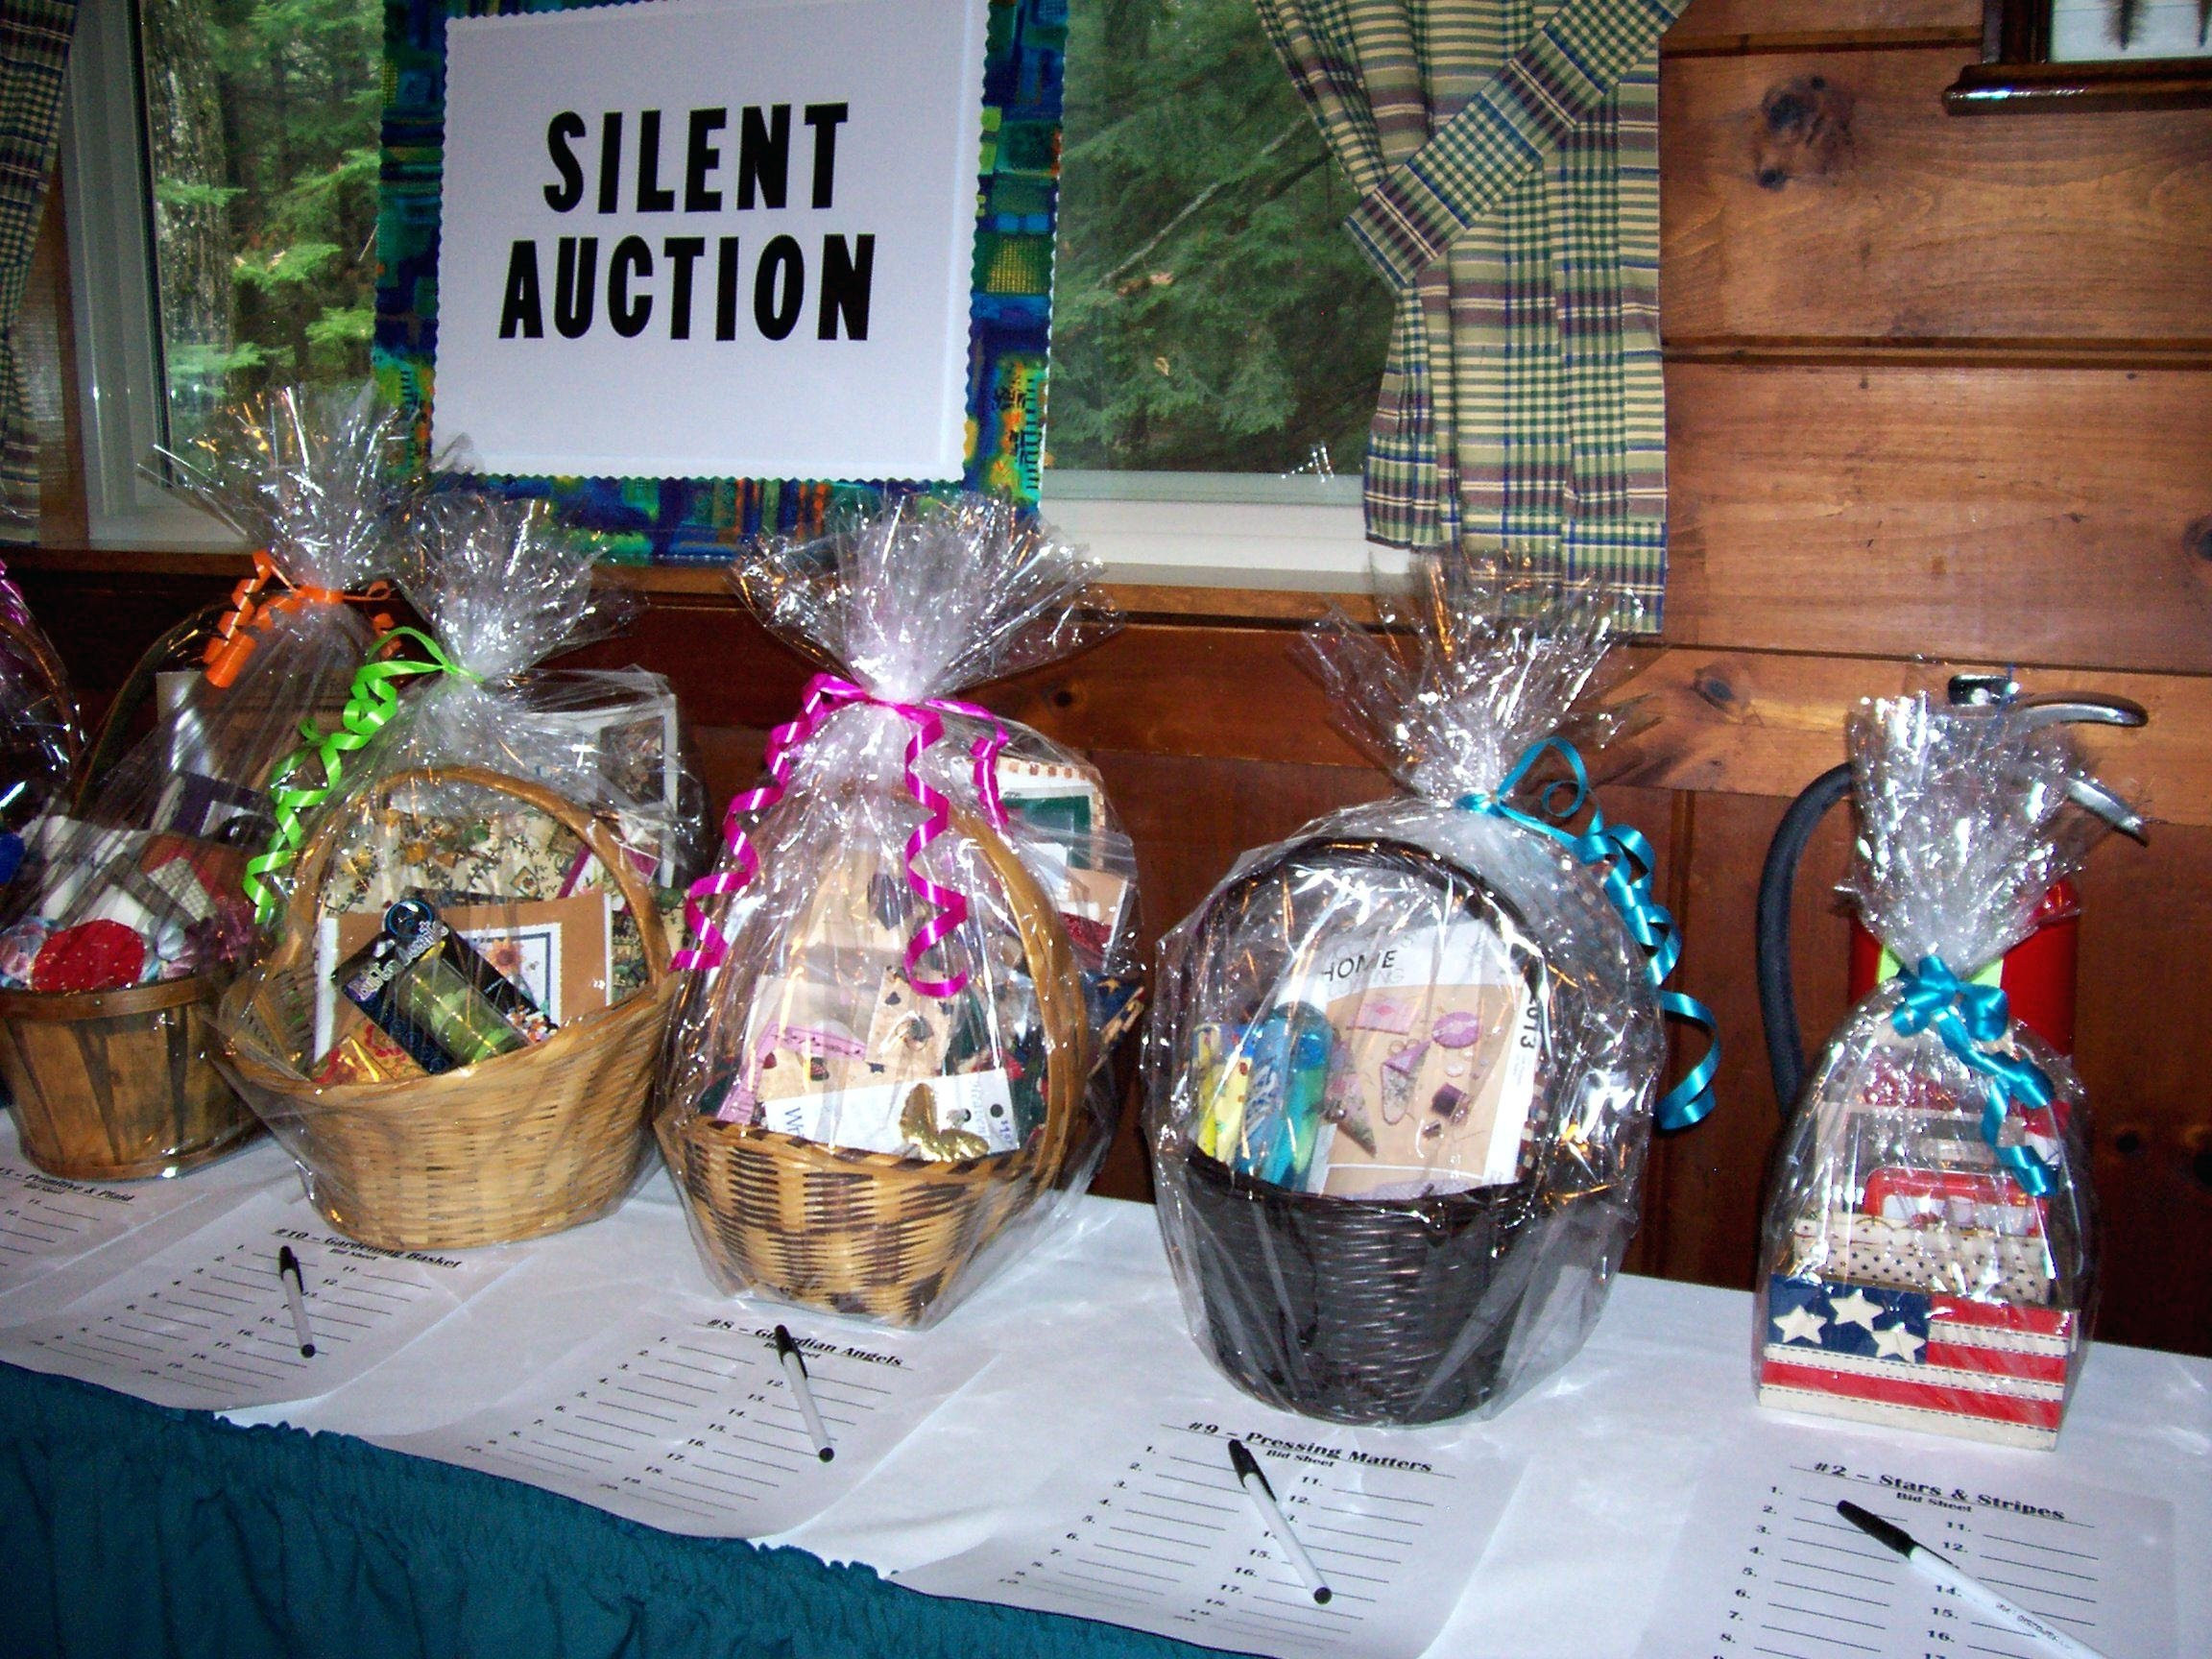 Silent Auction Gift Basket Ideas
 10 Cute Theme Basket Ideas For Silent Auction 2019